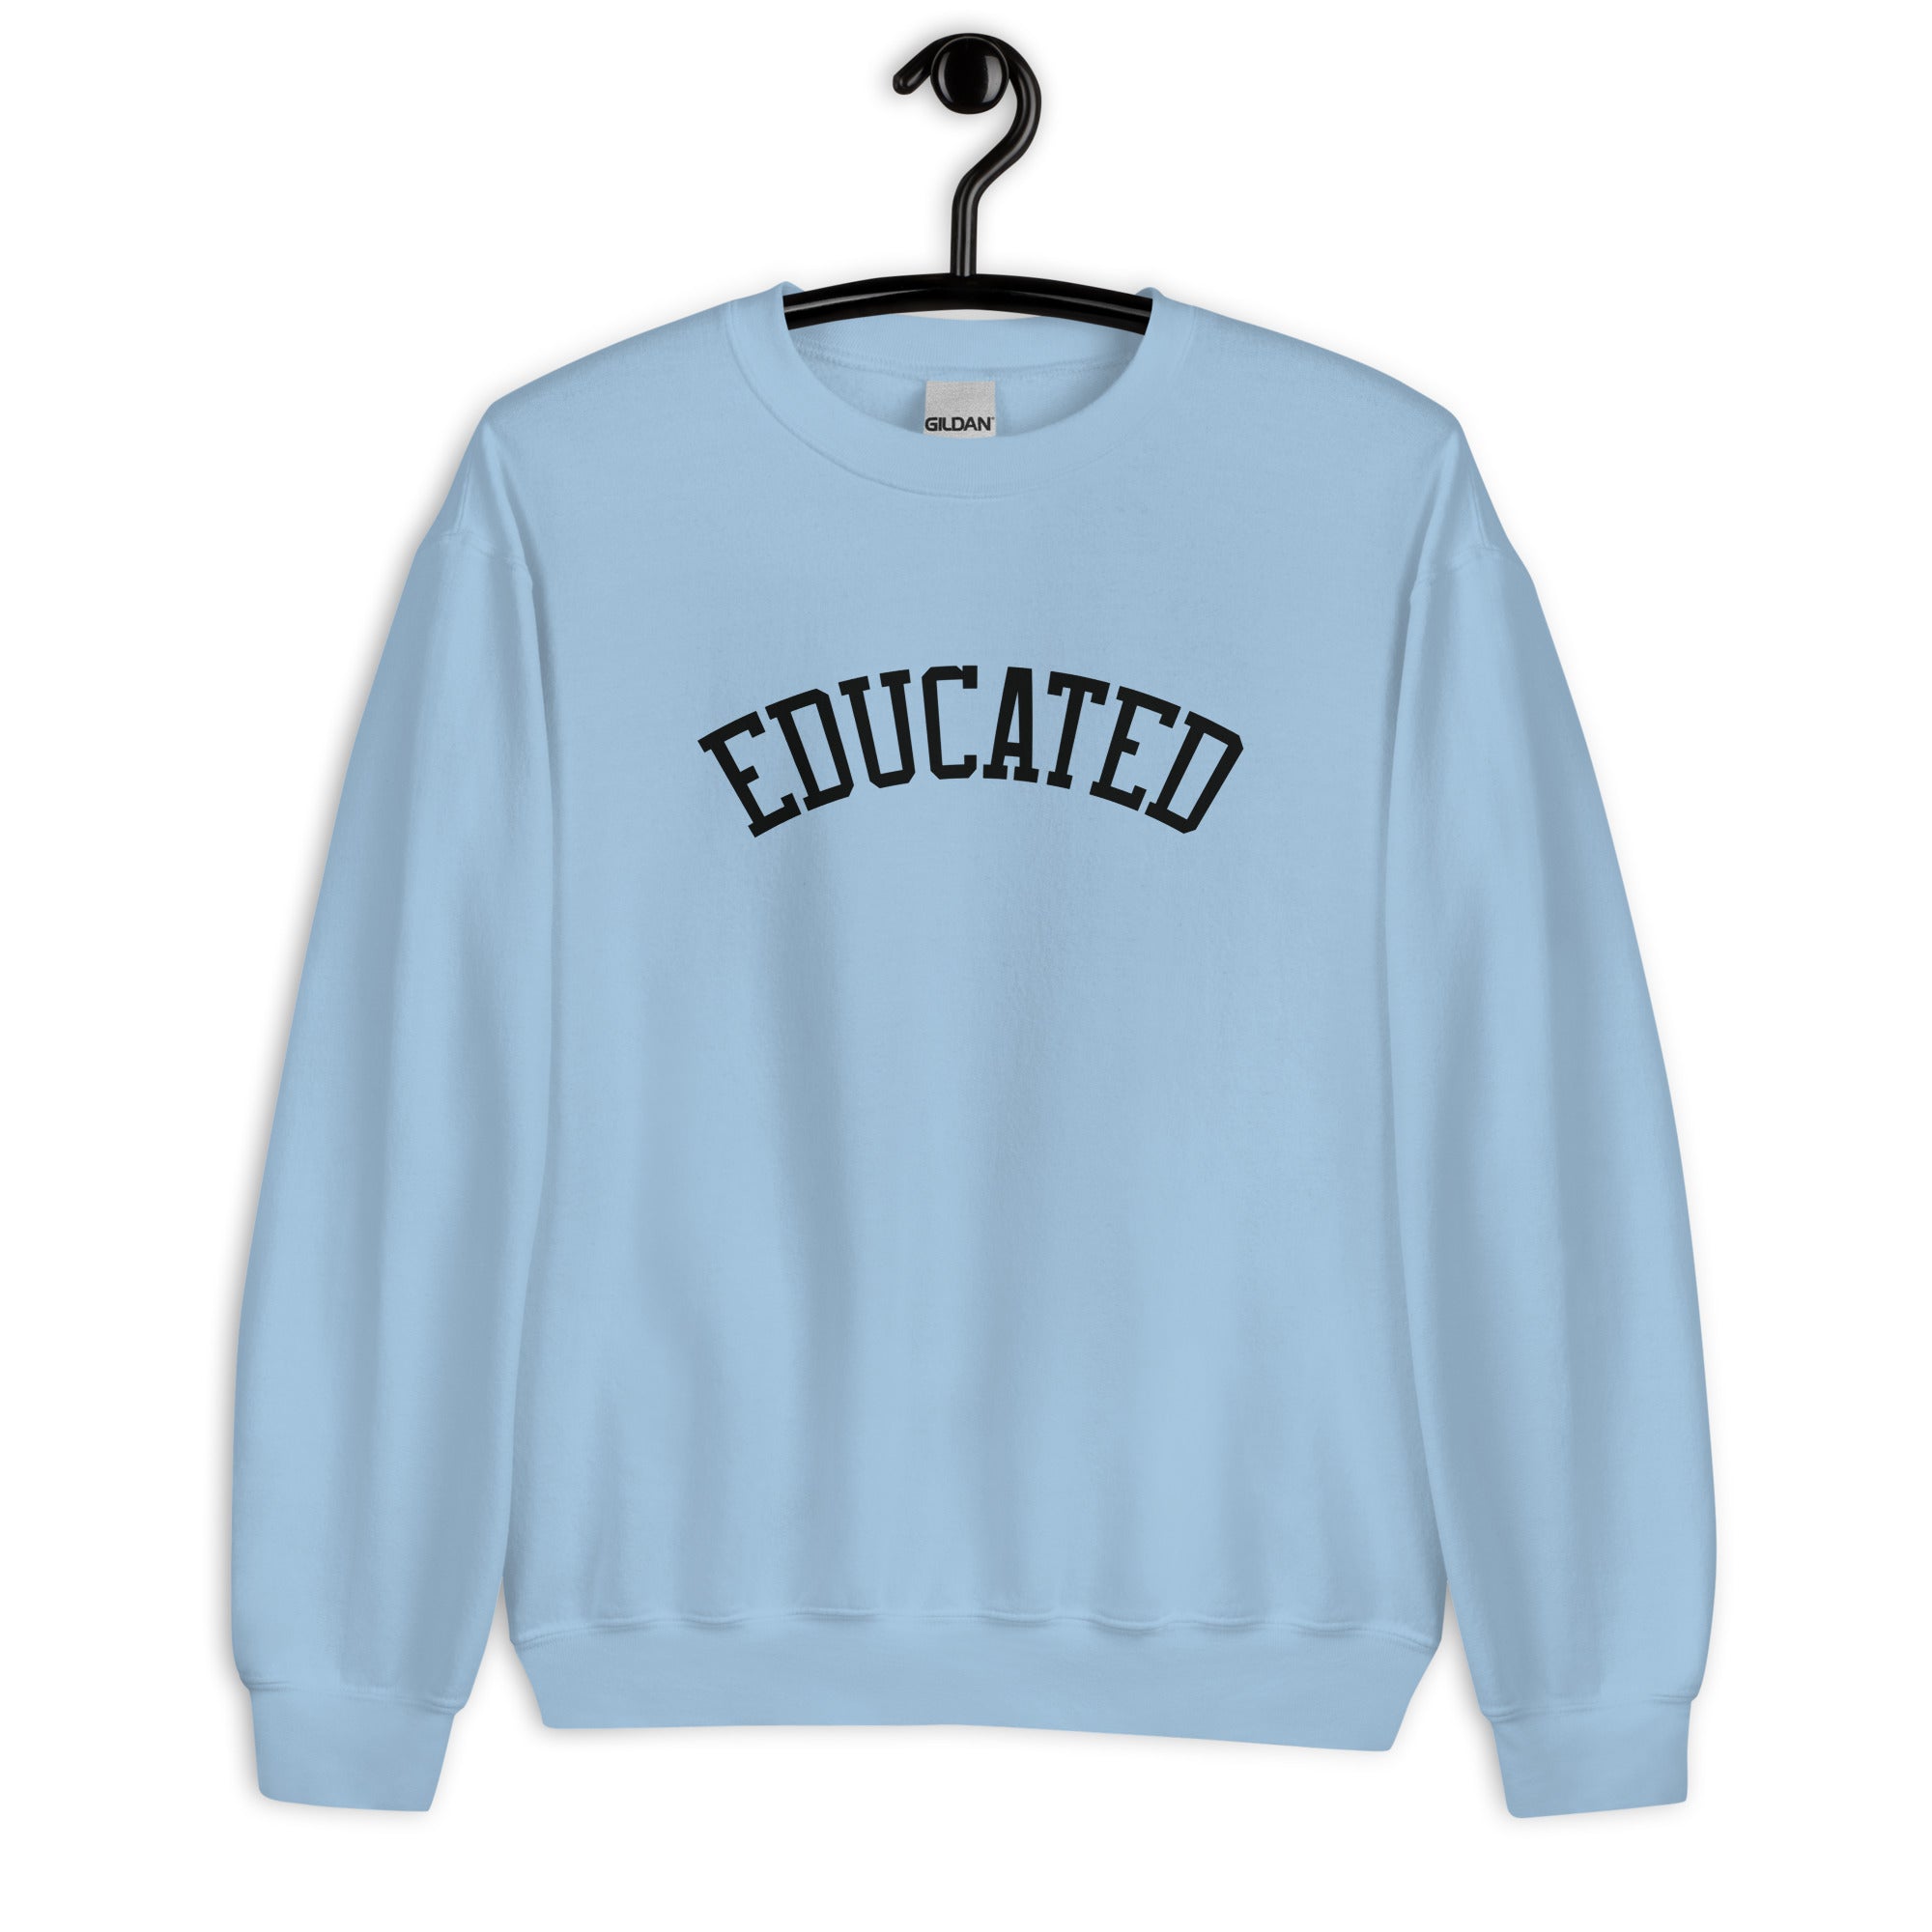 Unisex Sweatshirt | Educated